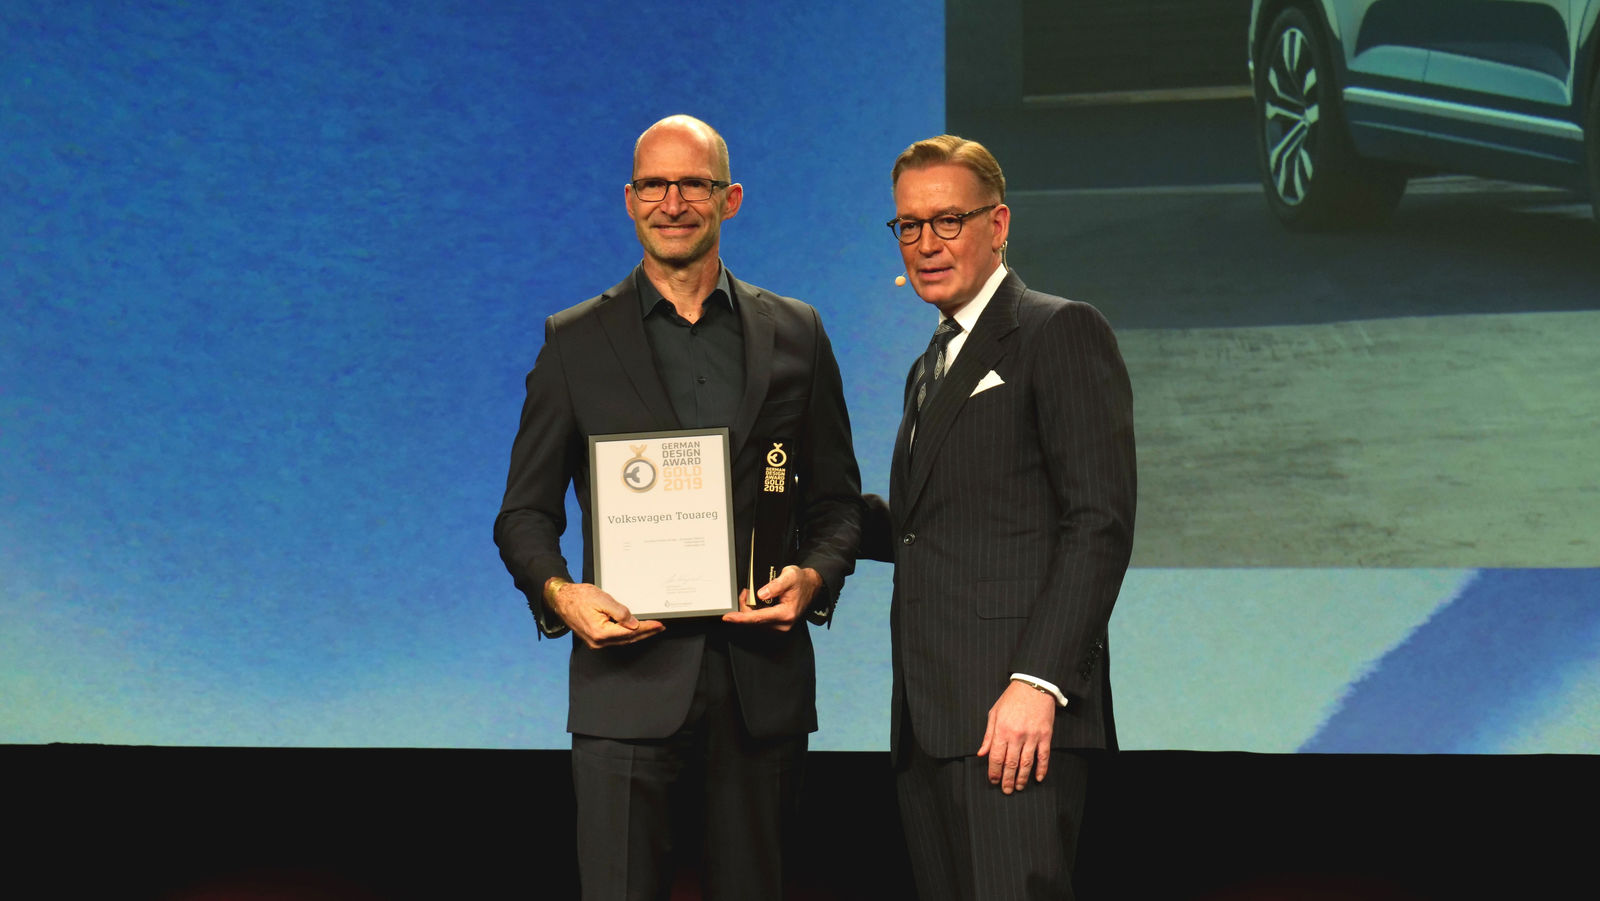 Volkswagen Touareg wins gold at the German Design Award